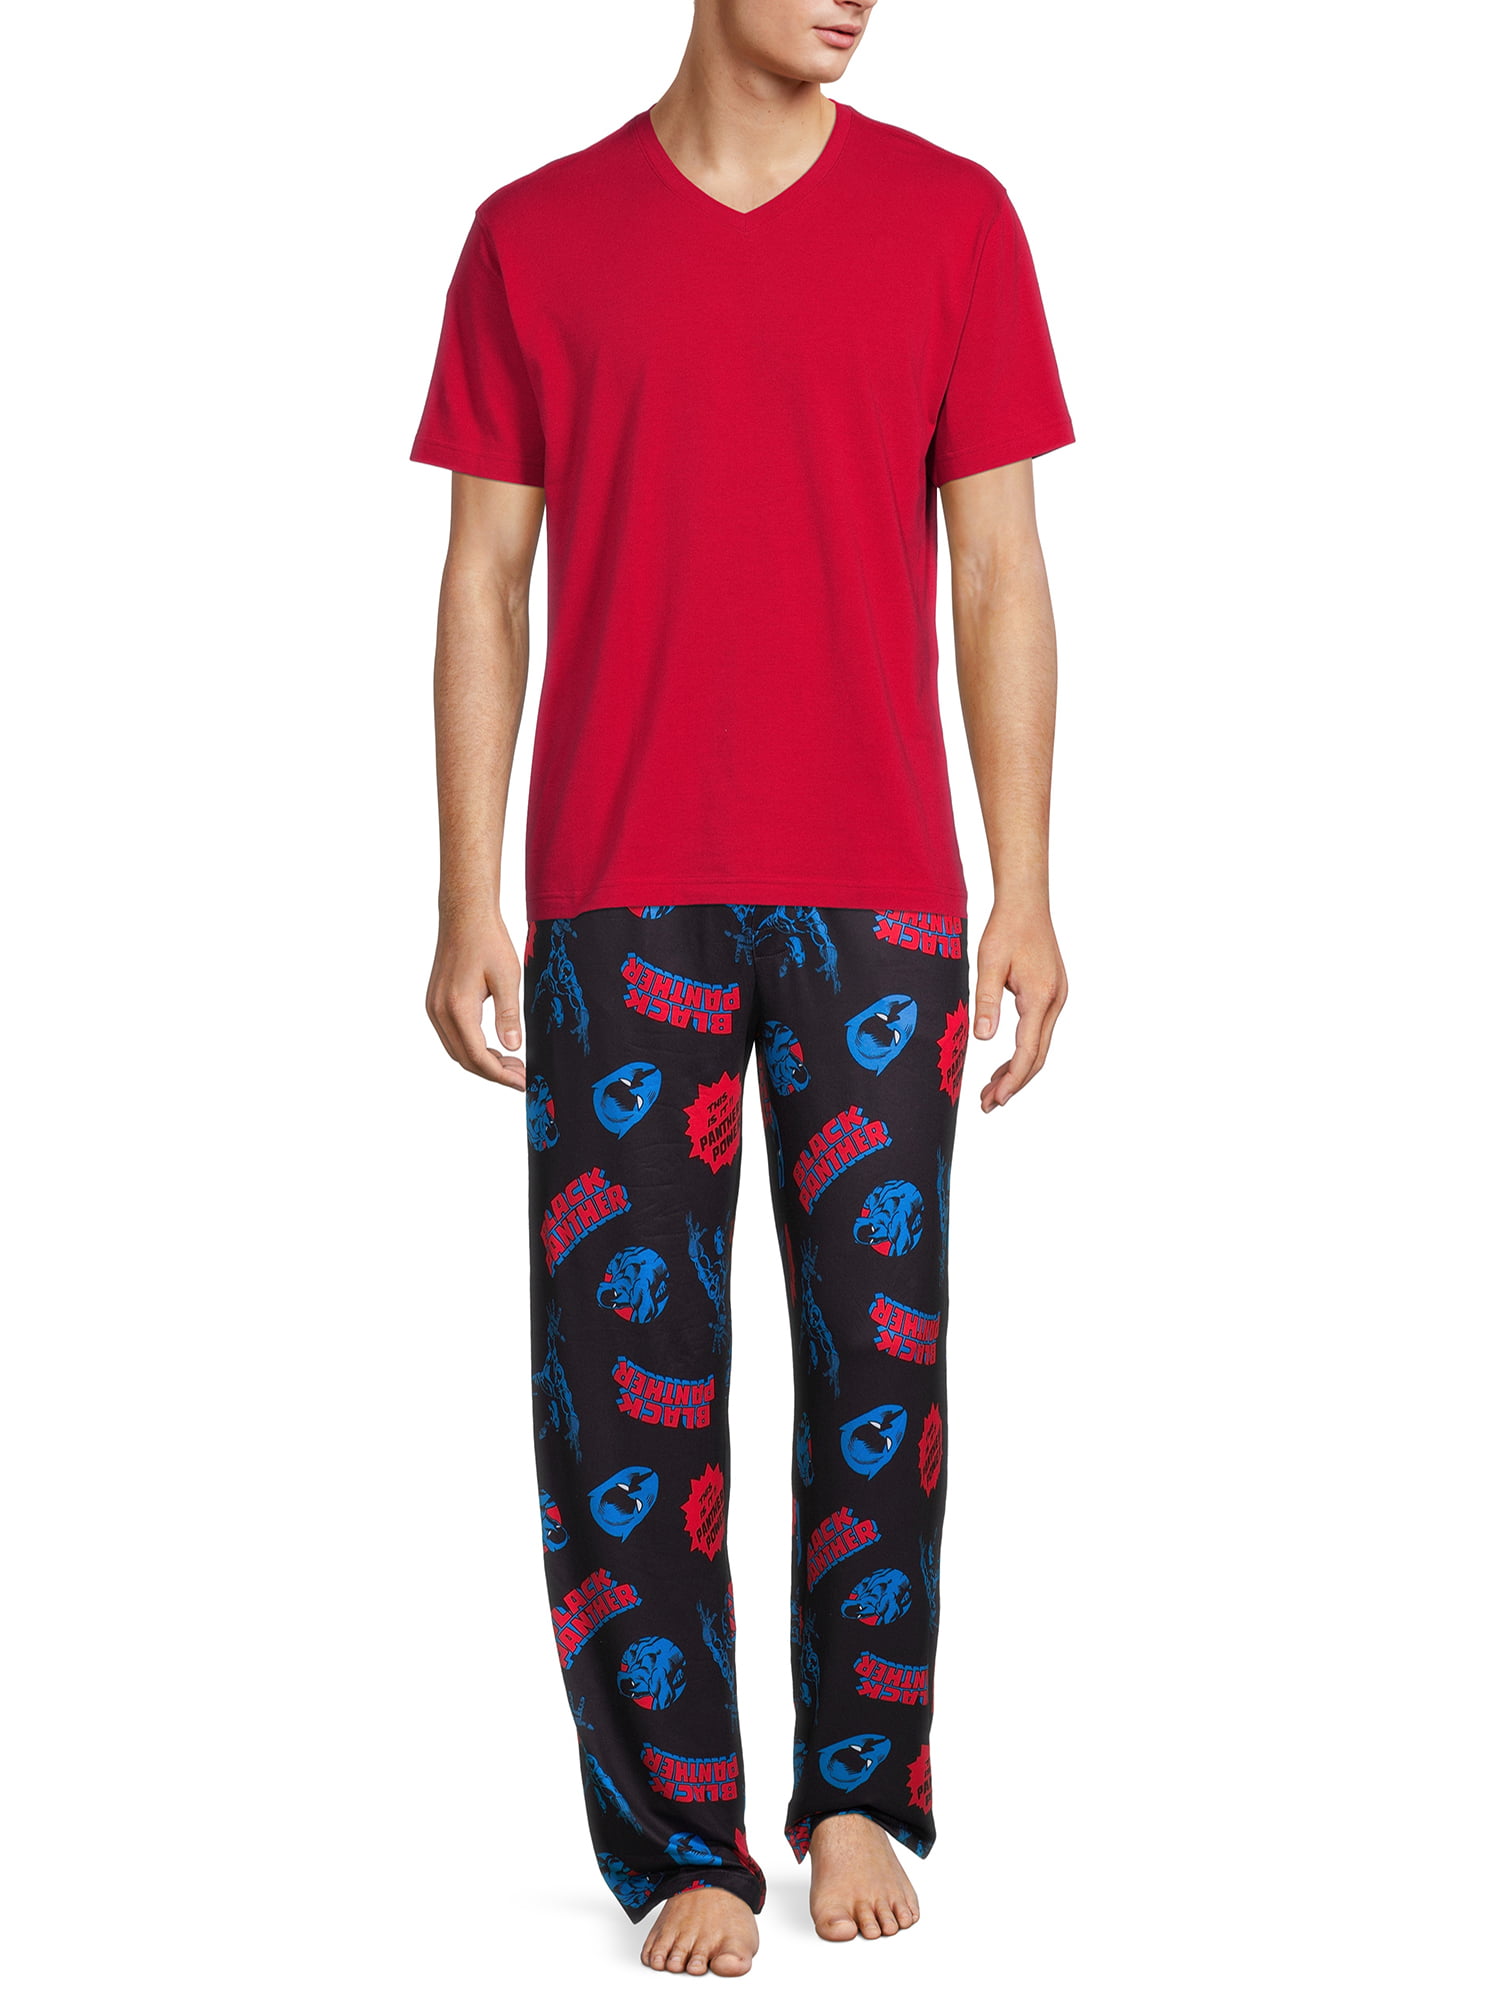 Marvel Heroes Heads Graphic Printed Pajama Sleep Lounge Pants Choose Sz S-XL 